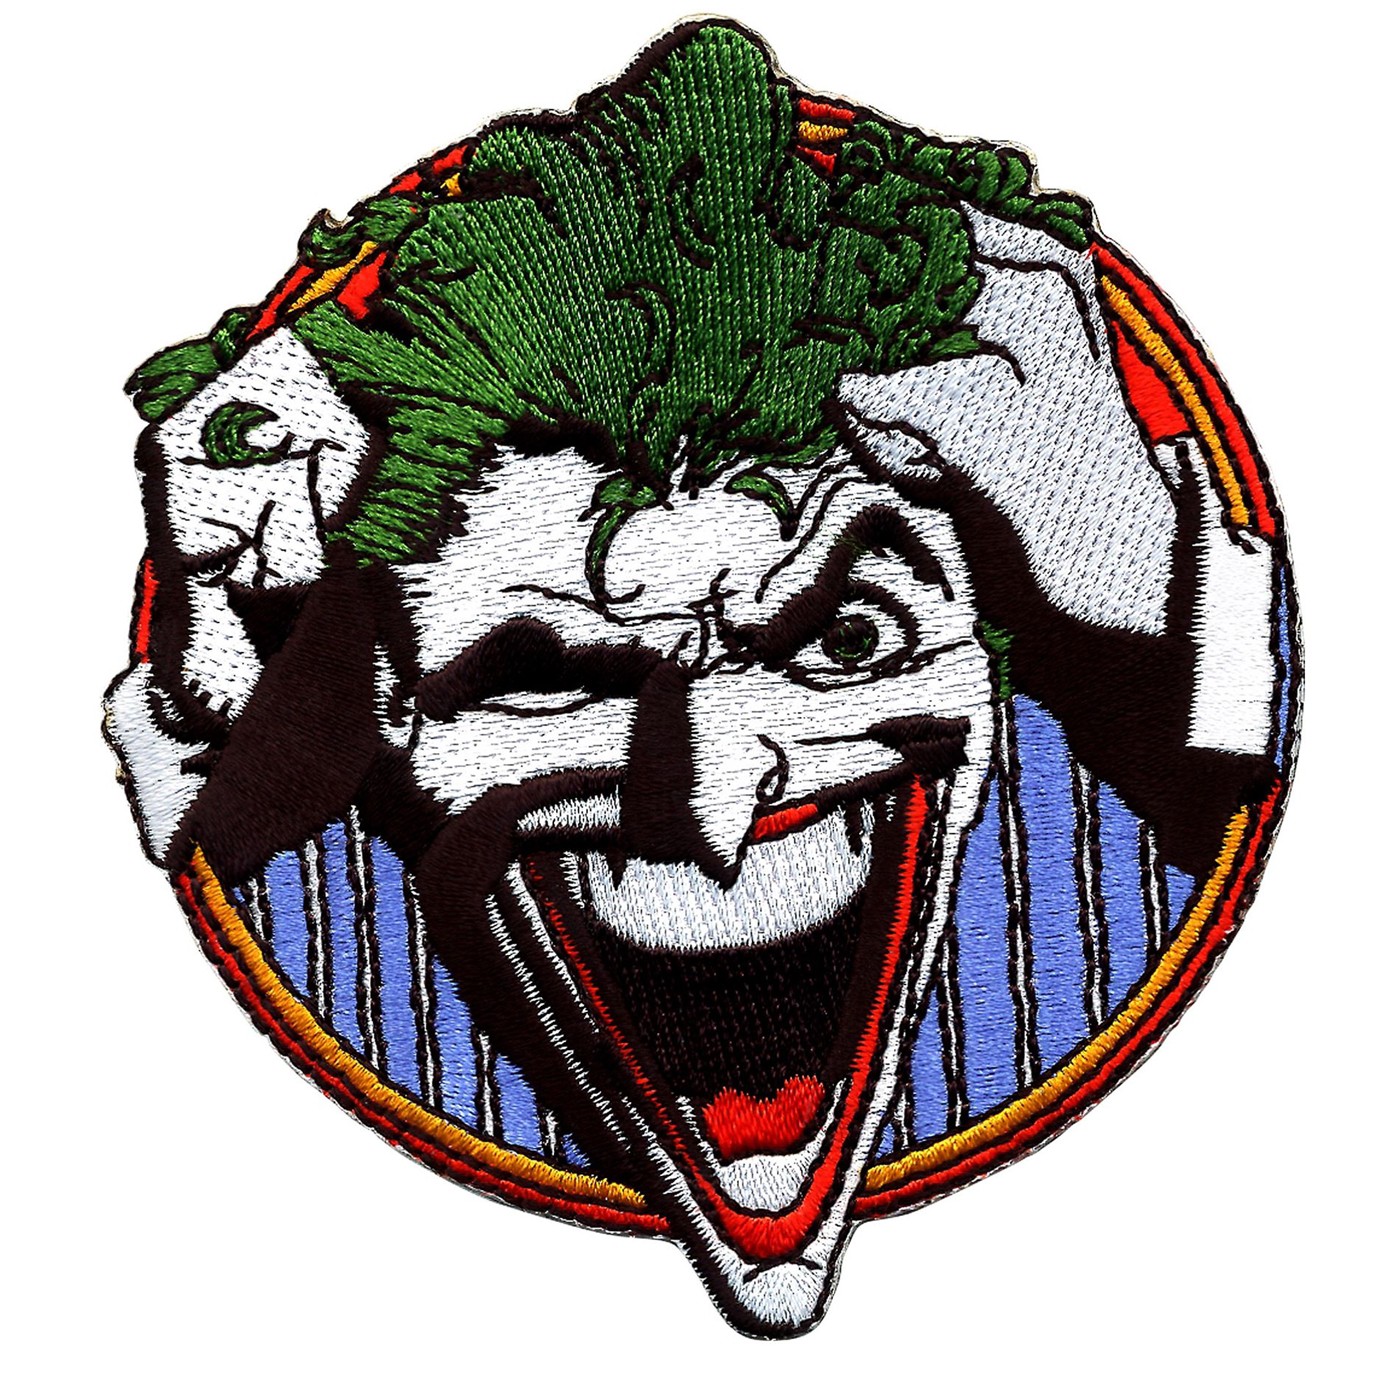 Joker Laughing Patch